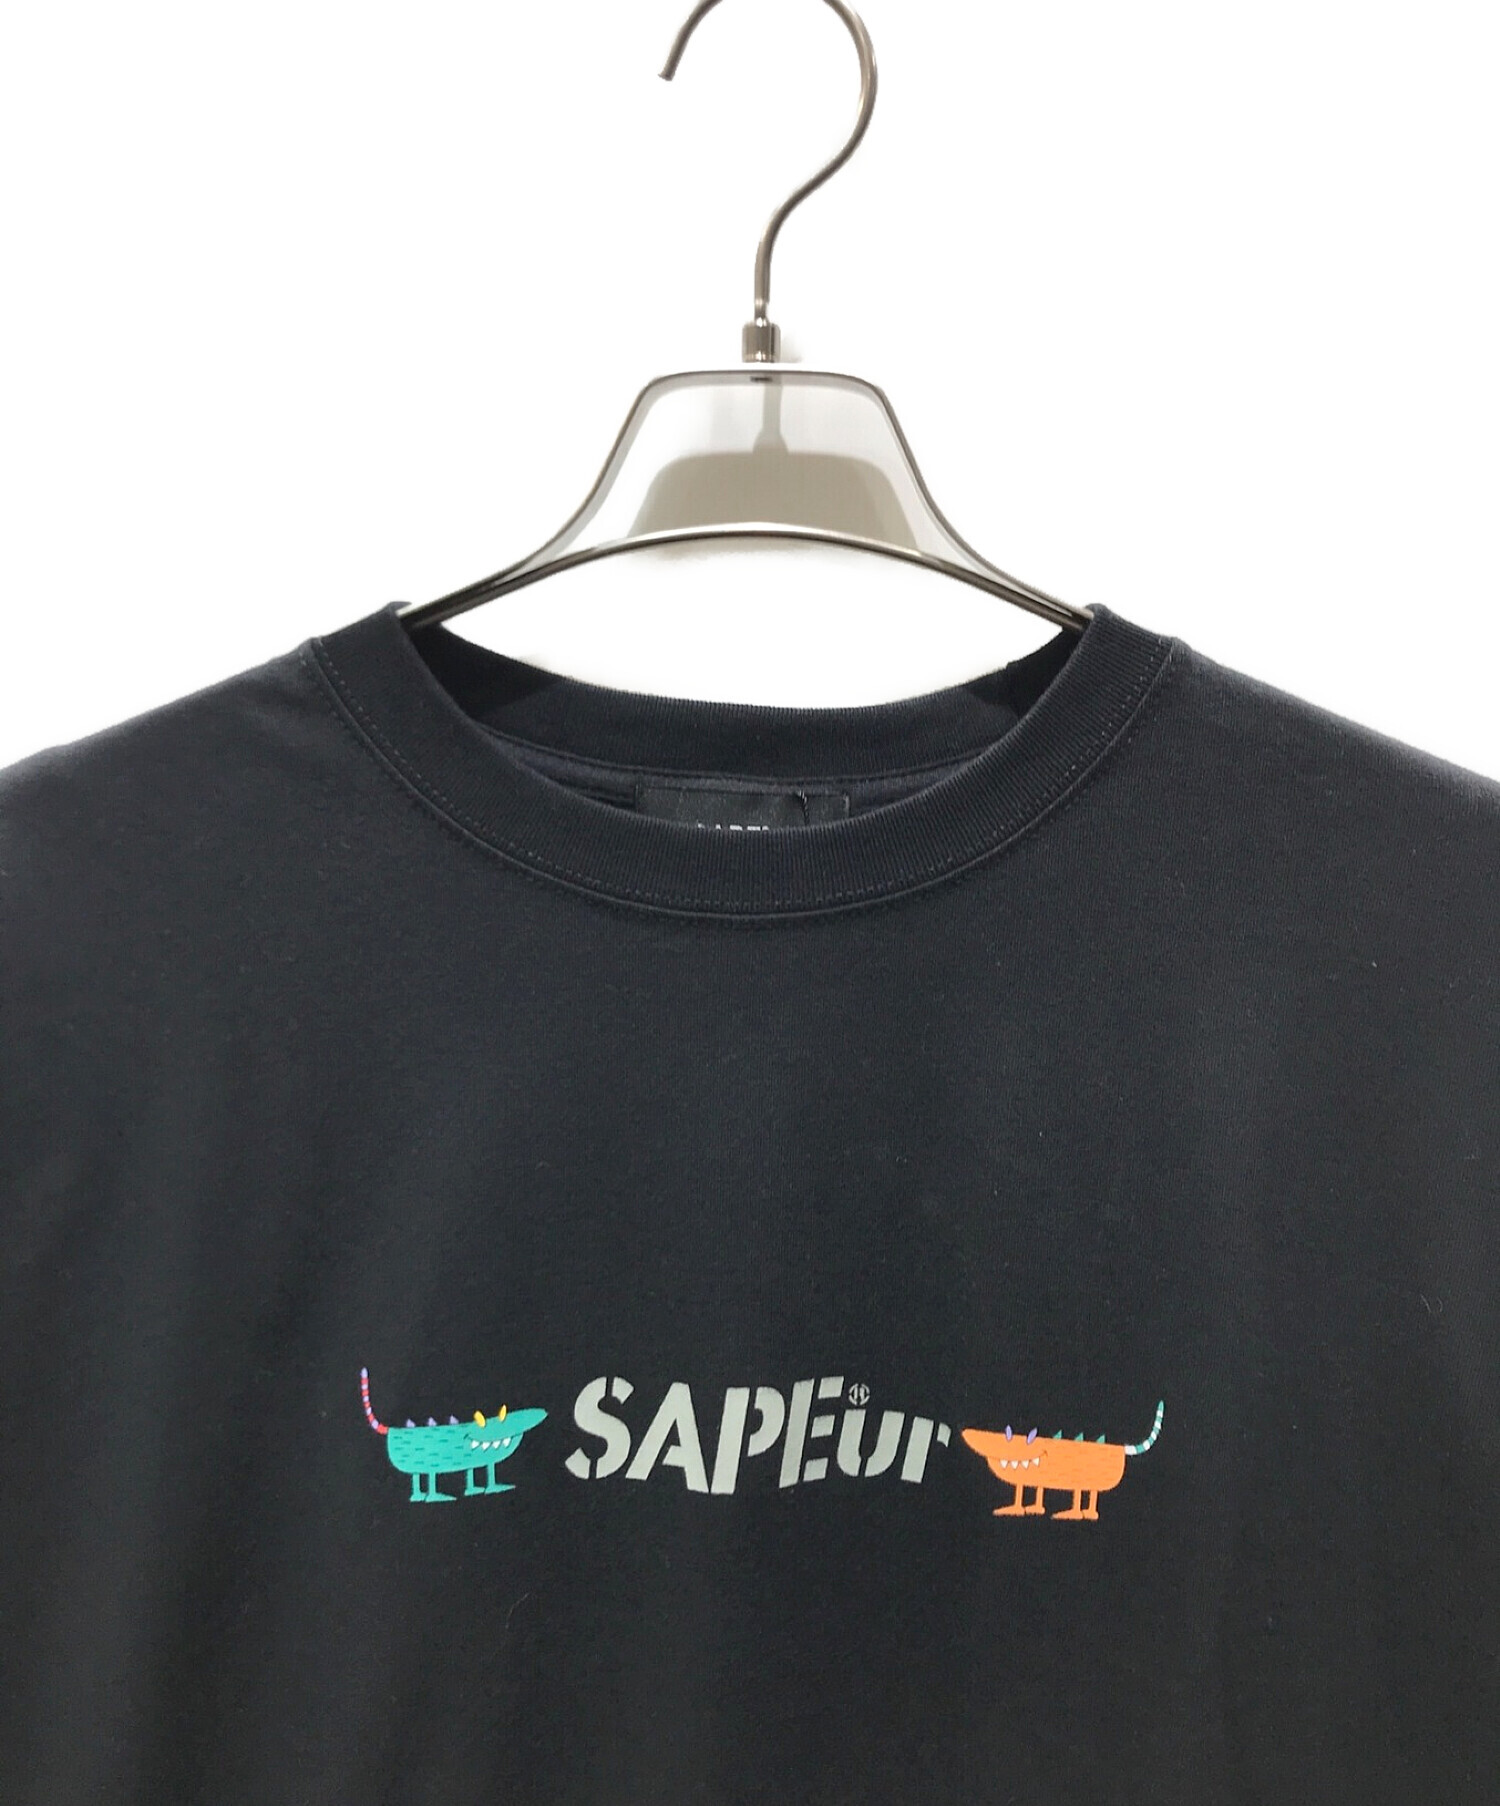 Tシャツ/カットソー(半袖/袖なし)新品 XL SAPEur starstripesHEAD black Tシャツ